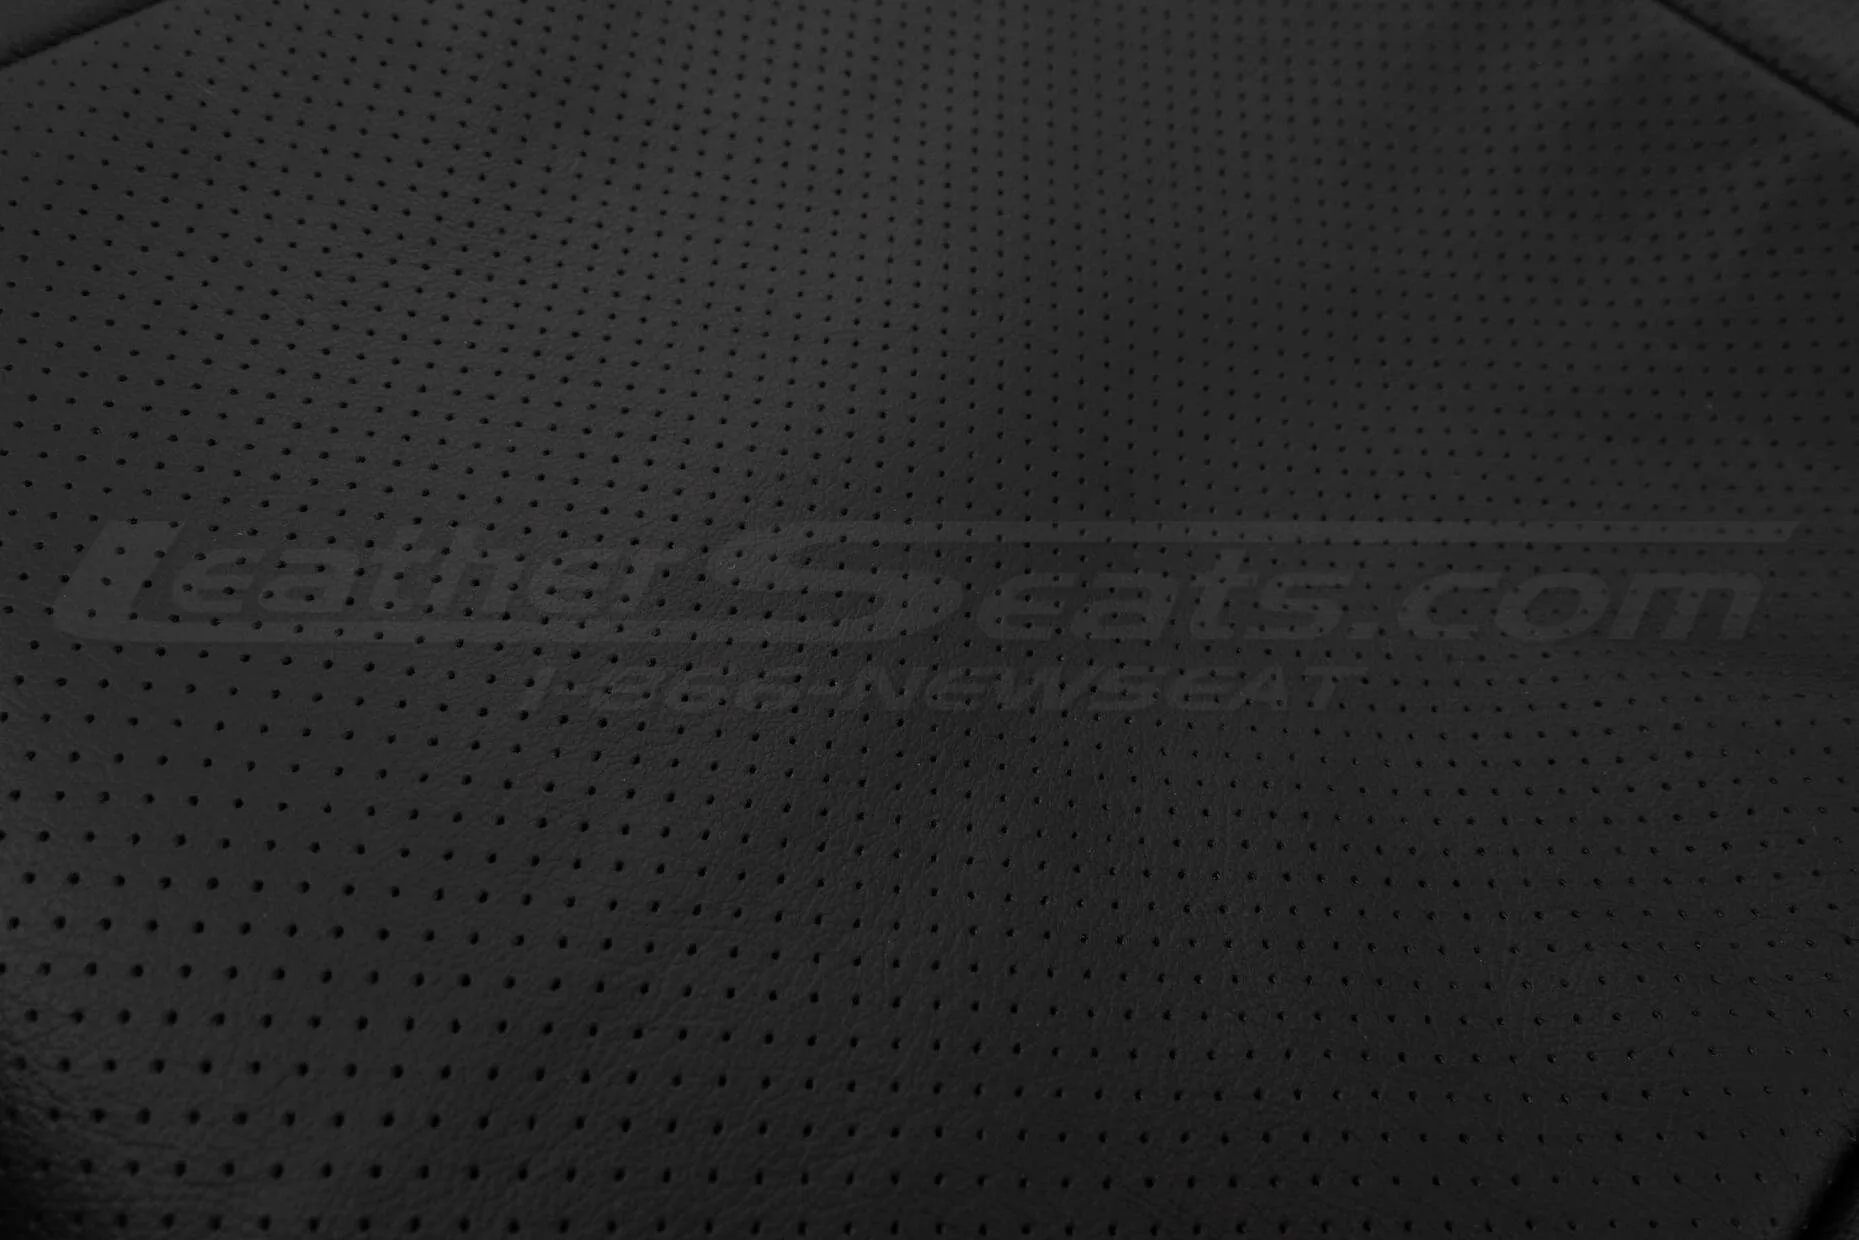 04-06 Pontiac GTO Leather Kit - Ecstasy Black - Perforation close-up